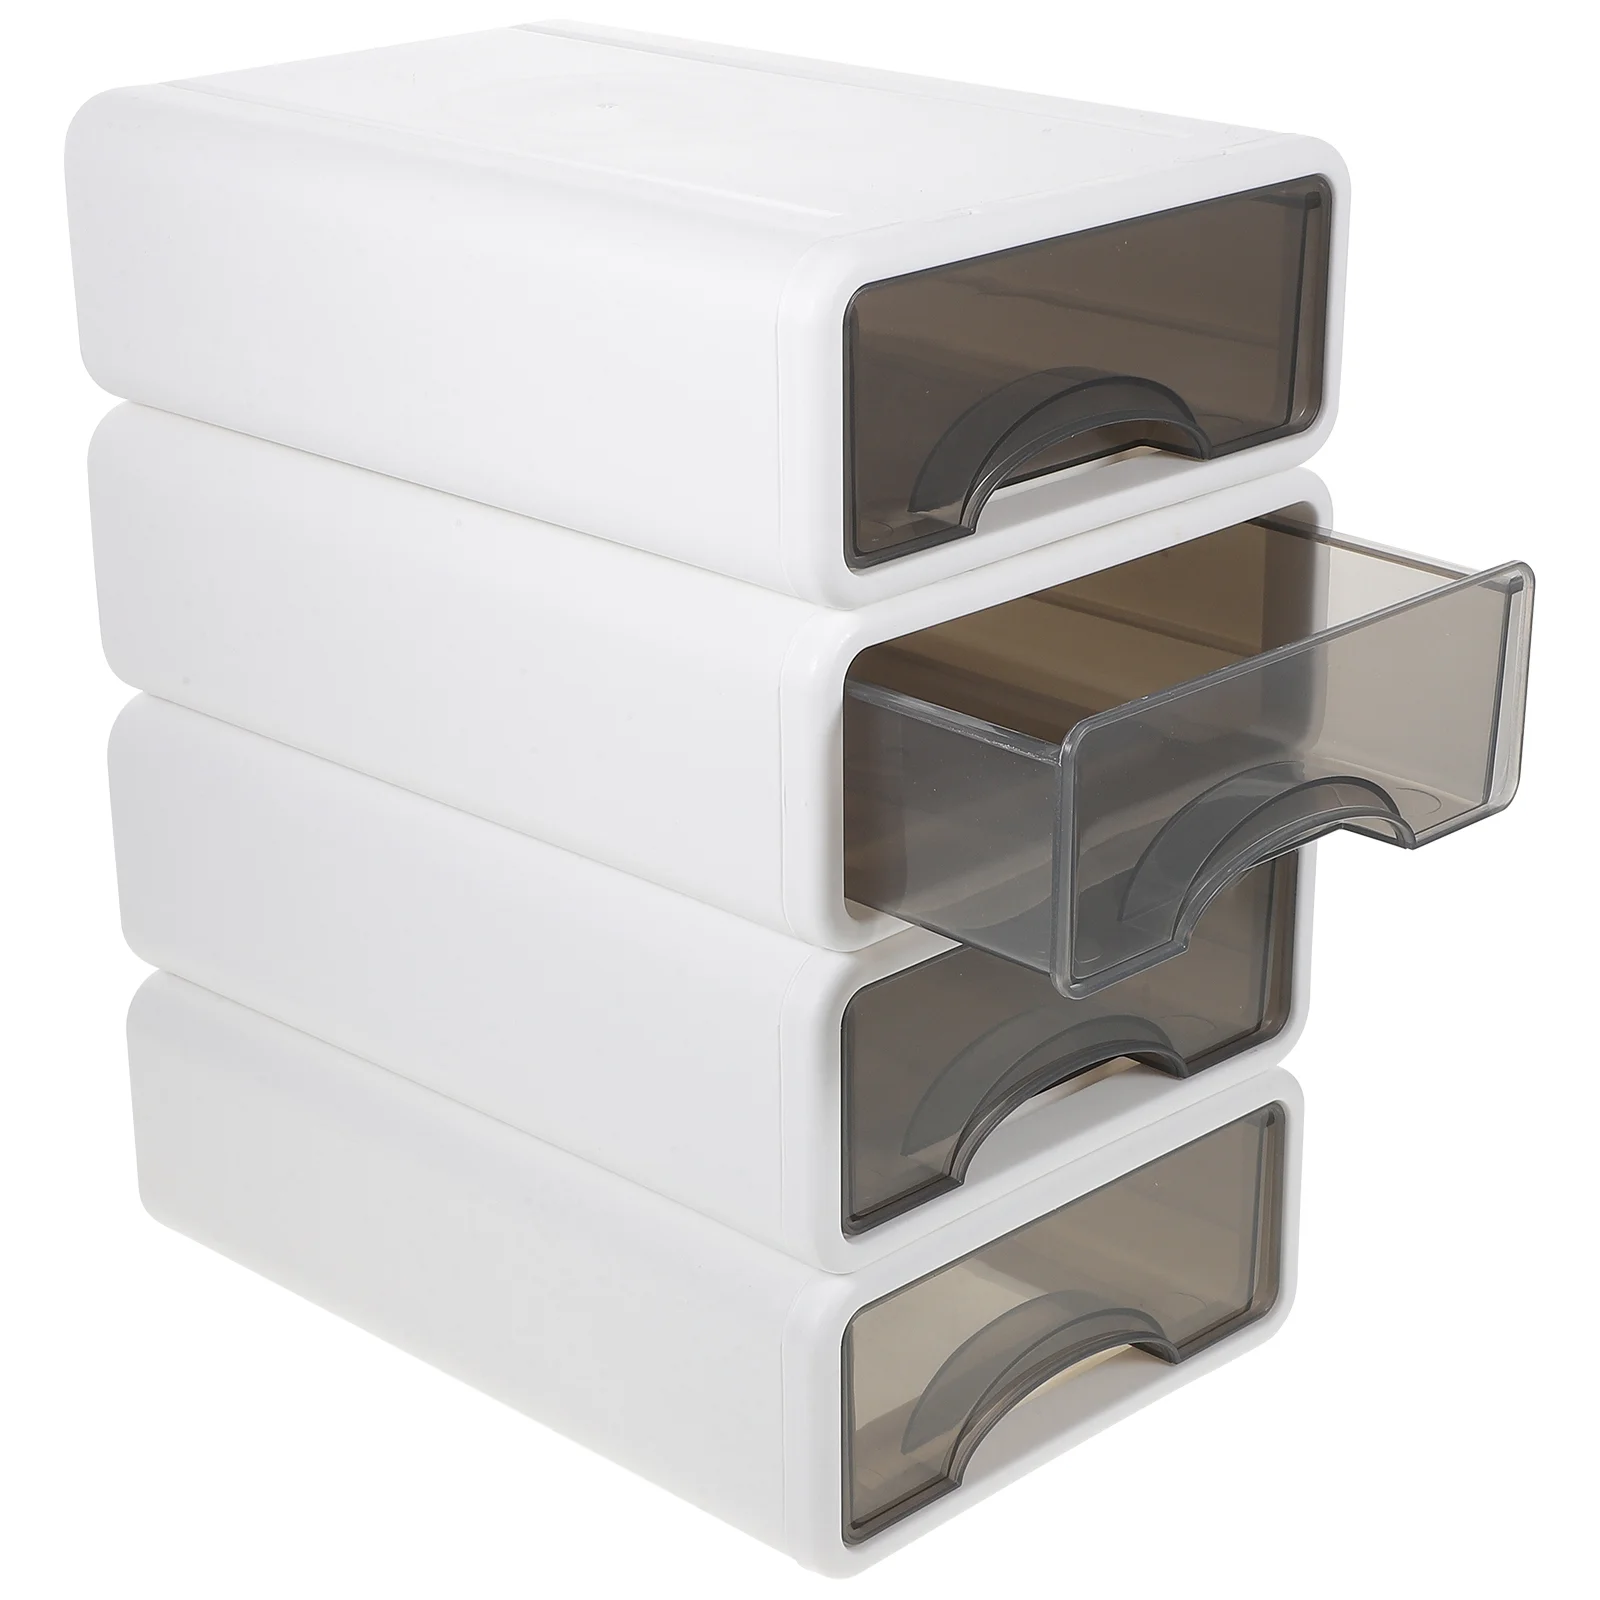 

4 Pcs Storage Rack Drawer Box Office Desk Makeup Organizer Stackable Bins Pp Organizers Drawers